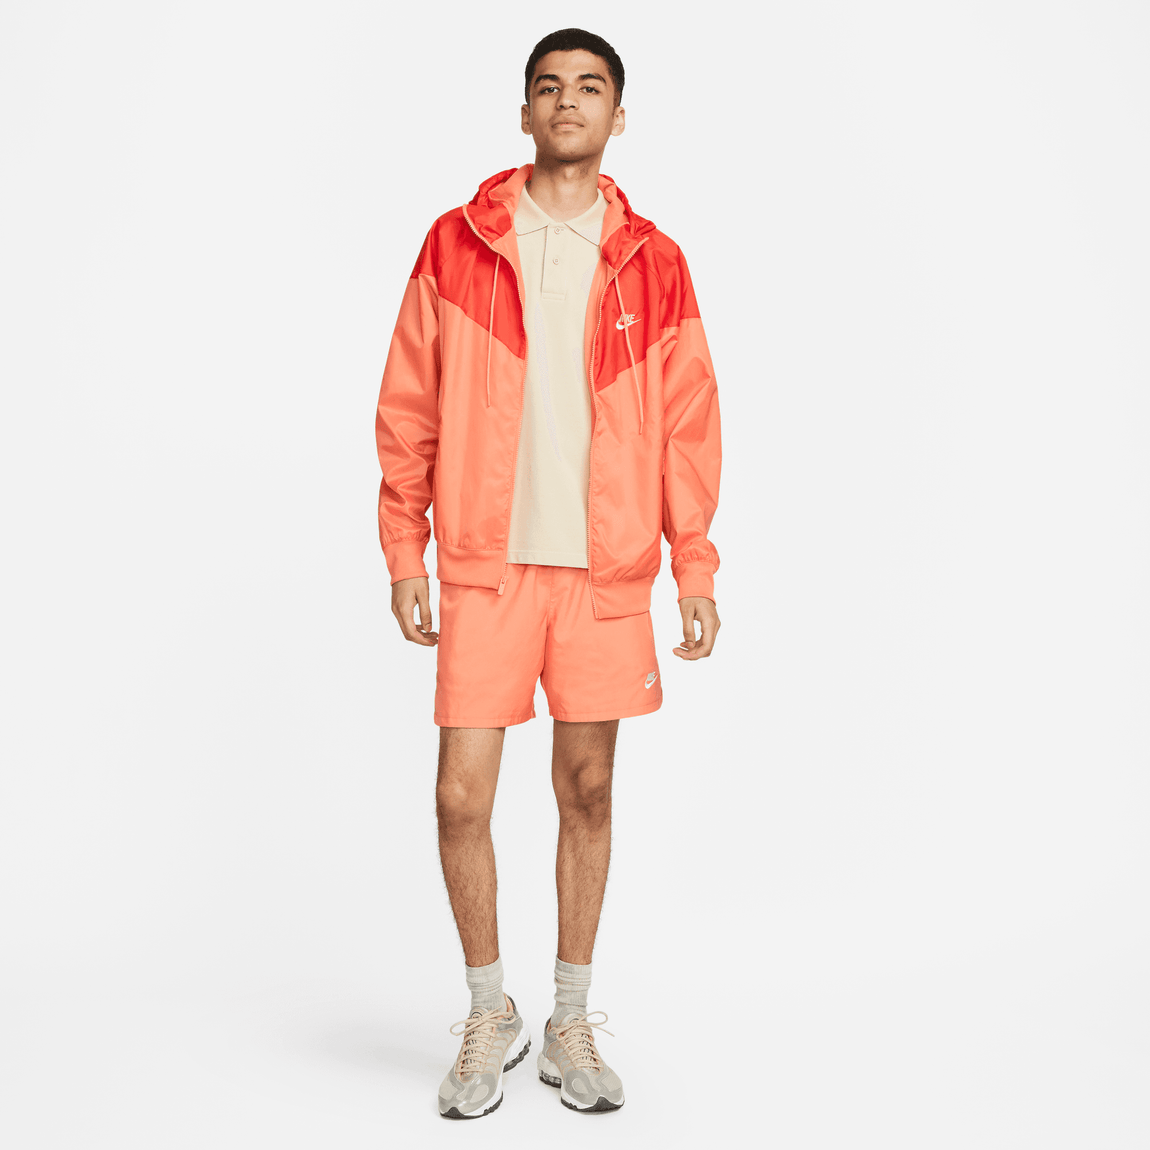 Nike Sportswear Windrunner (Orange Trance/Light Crimson-Medium Soft Pink) - Nike Sportswear Windrunner (Orange Trance/Light Crimson-Medium Soft Pink) - 